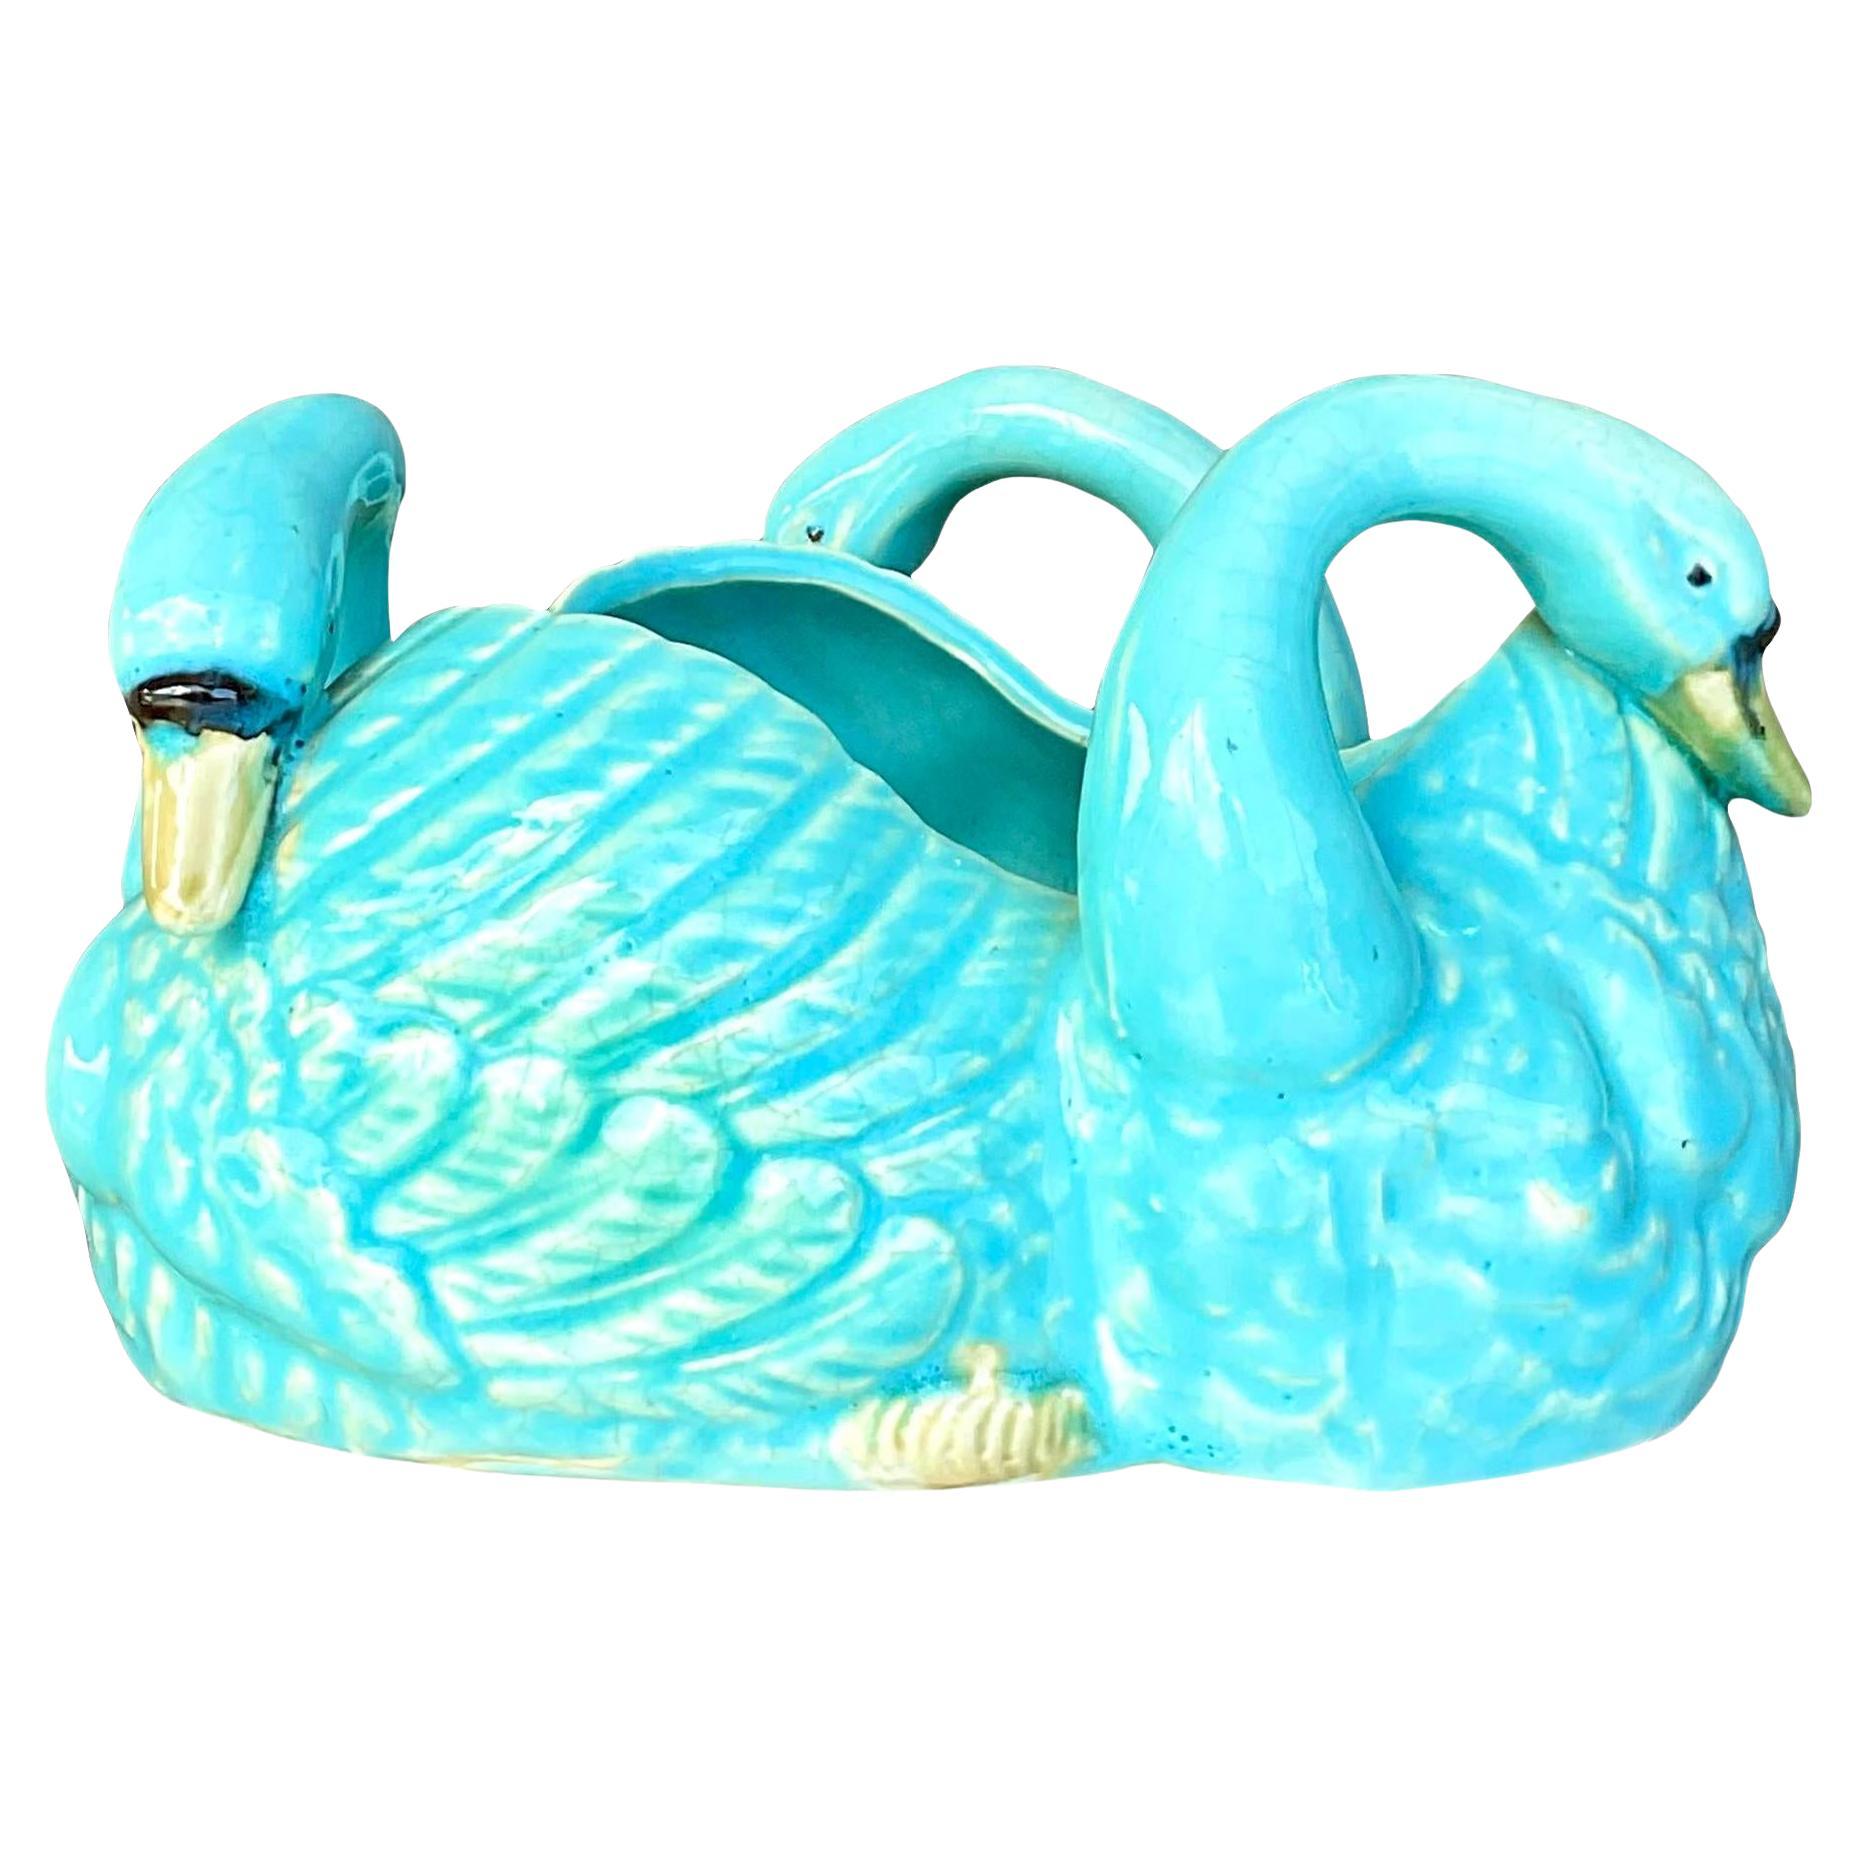 Vintage Regency Blue Swan Tafelaufsatz Schale